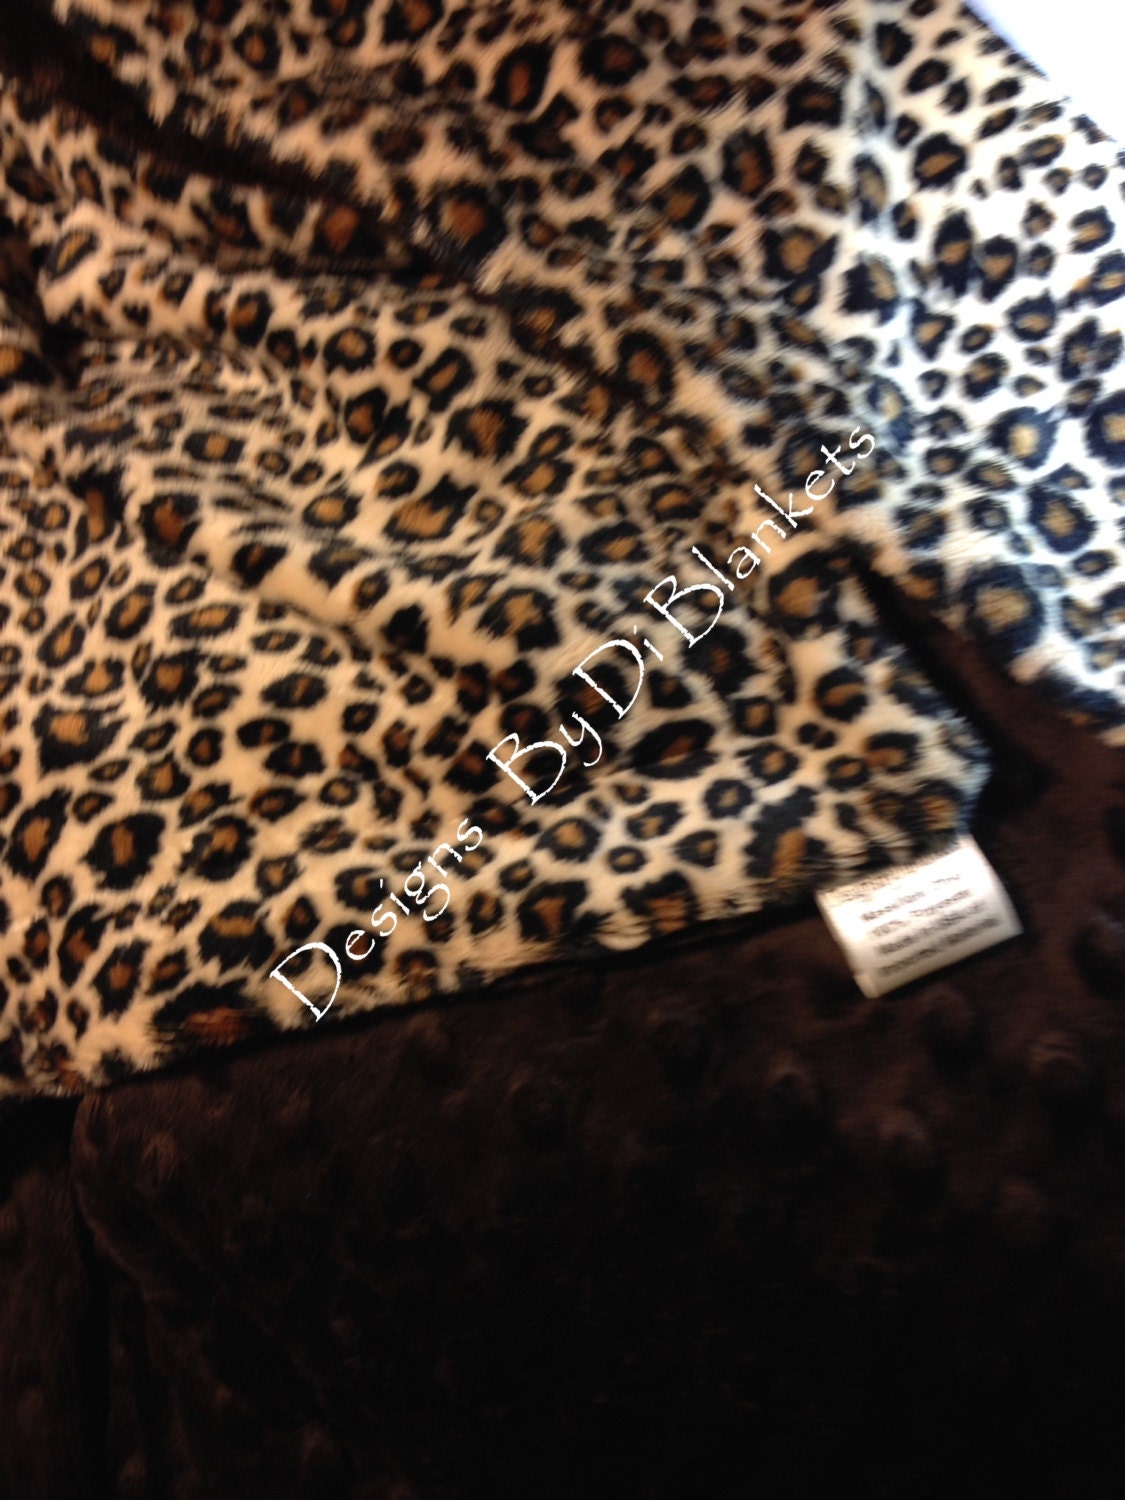 Cheetah Print Minky Thrrow Blanket,Animal Print Minky Baby Blanket, Toddler Bedding, Baby Boy or Baby Girl  Bedding, Size 40x50 in